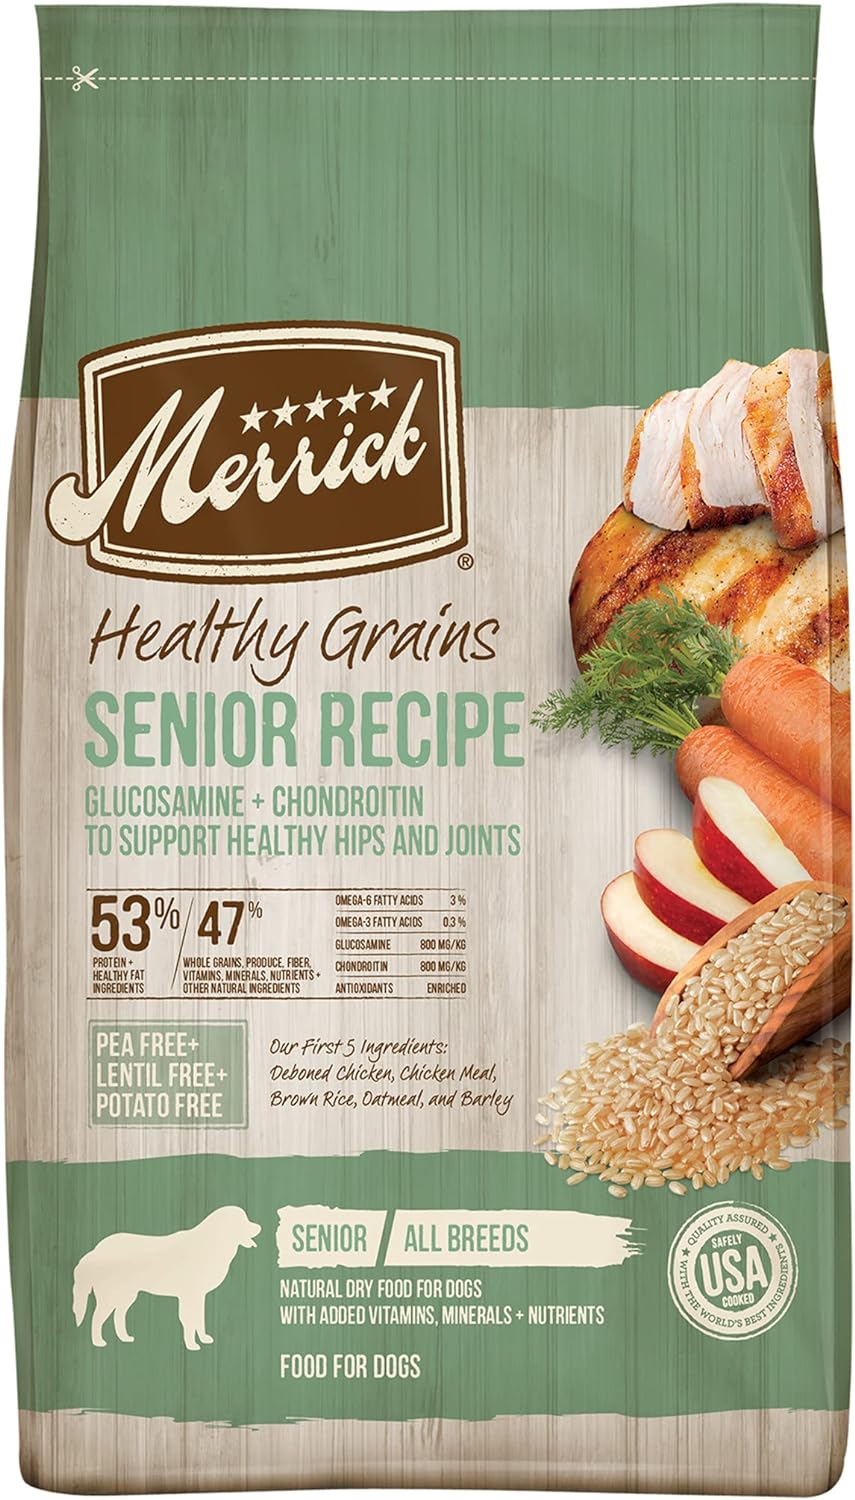 Merrick Healthy Grains Senior Recipe Dry Dog Food – Gallery Image 1